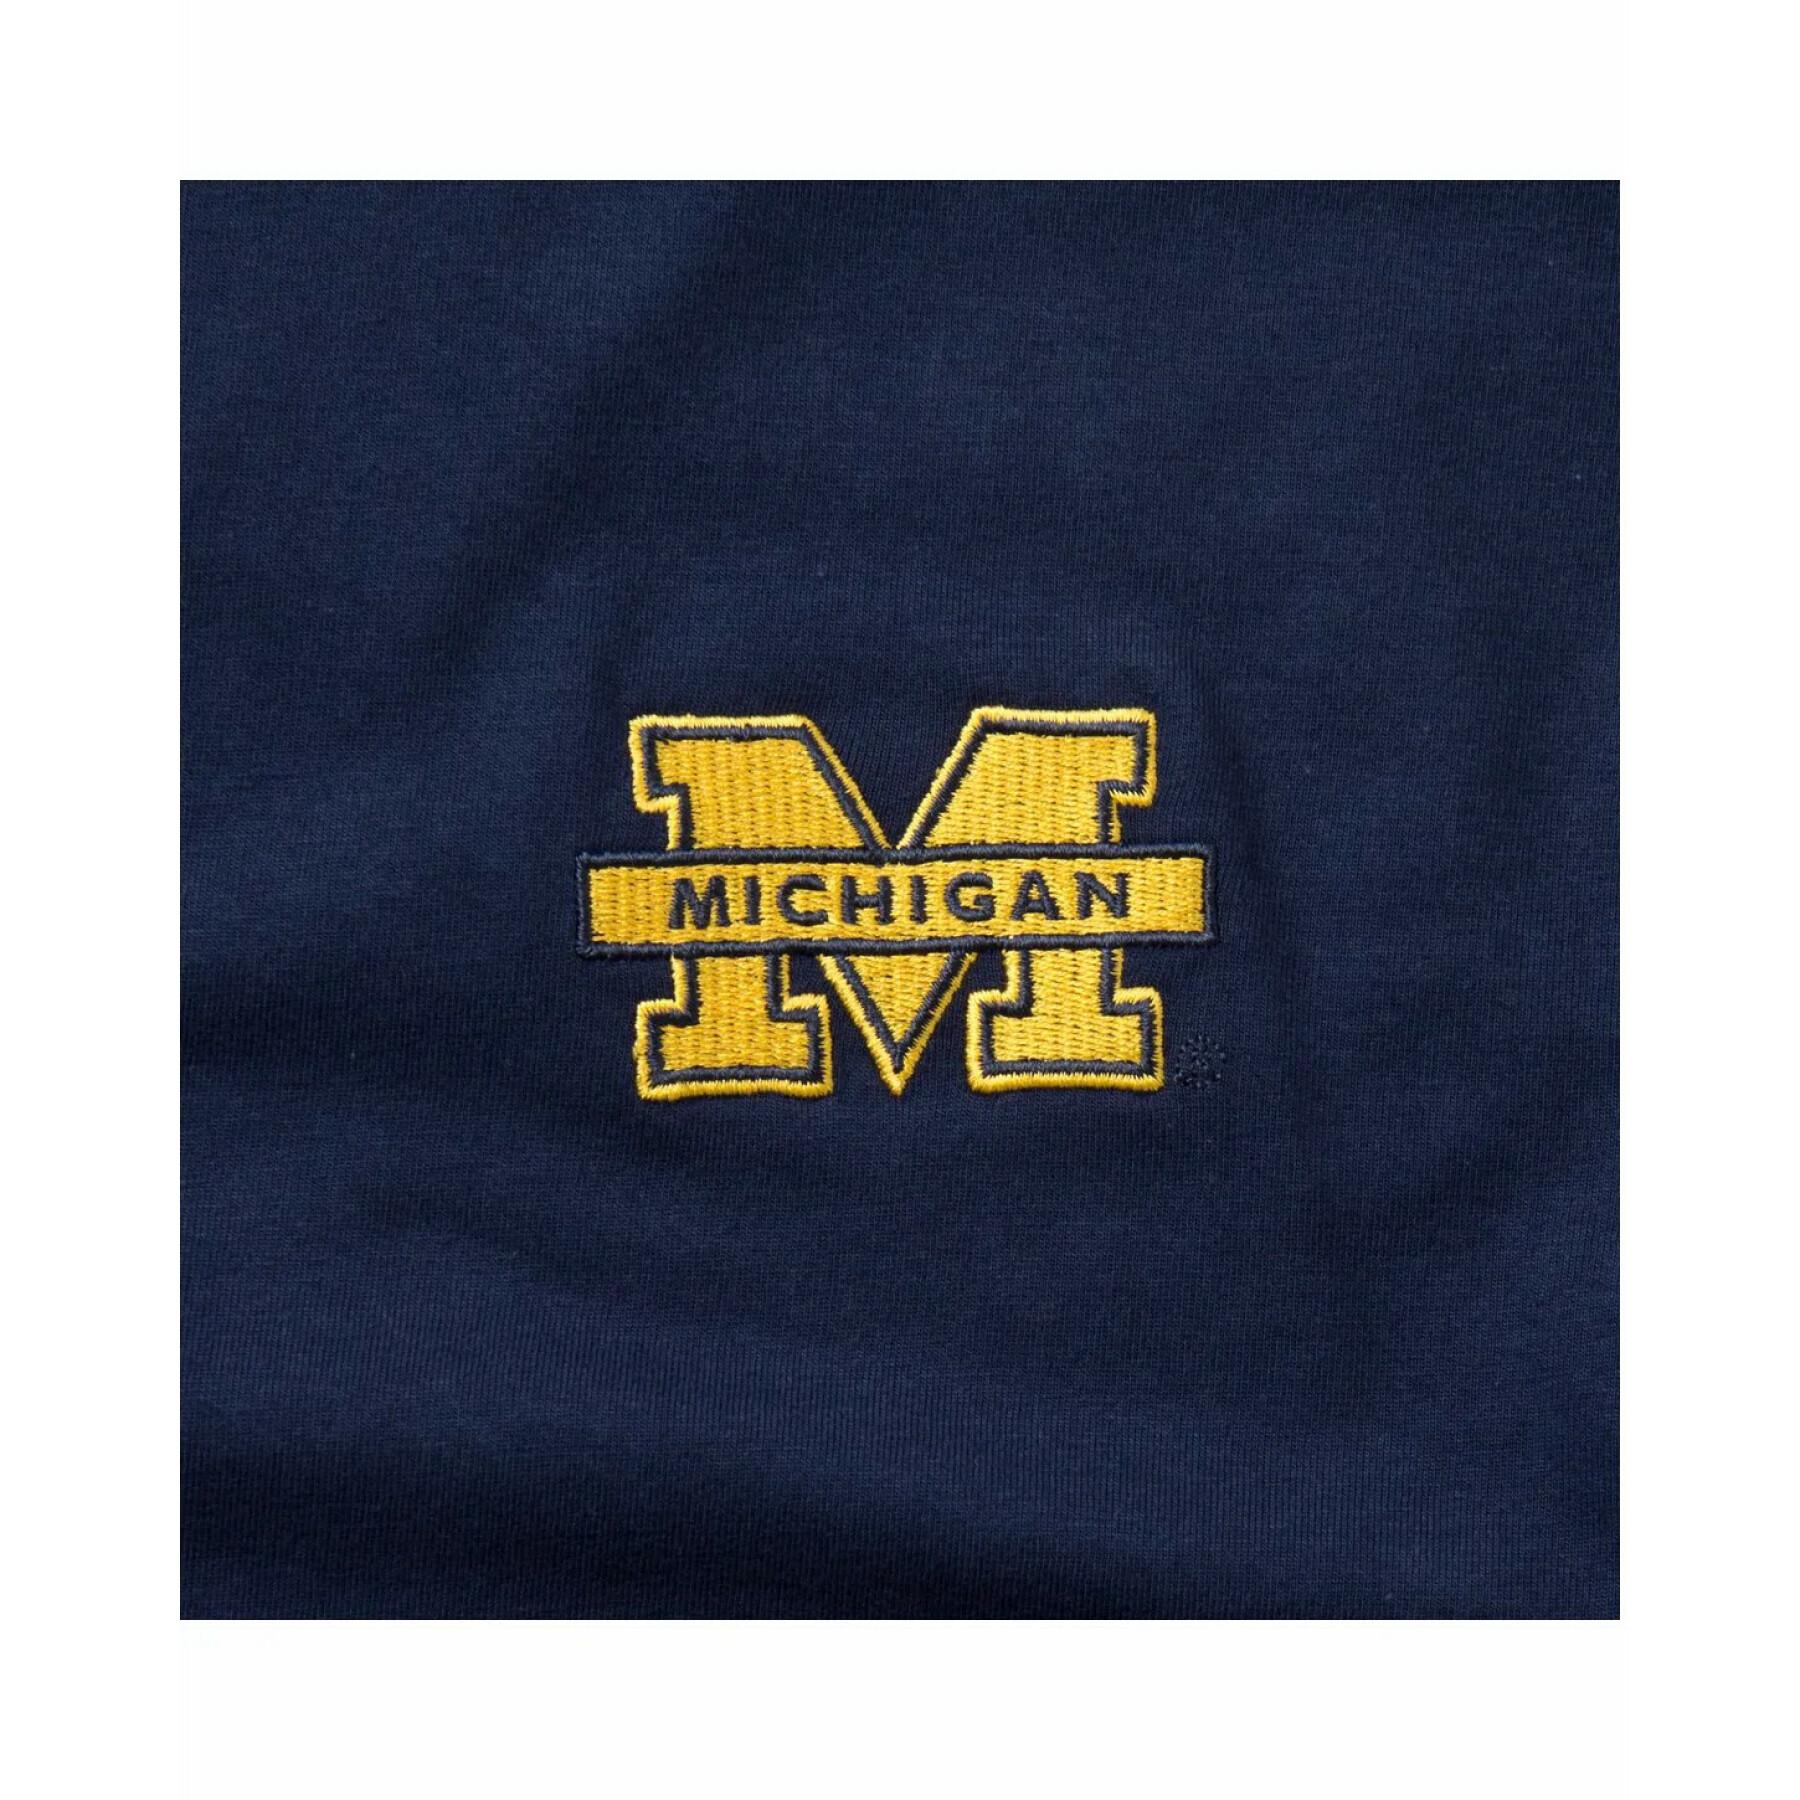 T-shirt universiteit van michigan geborduurd logo